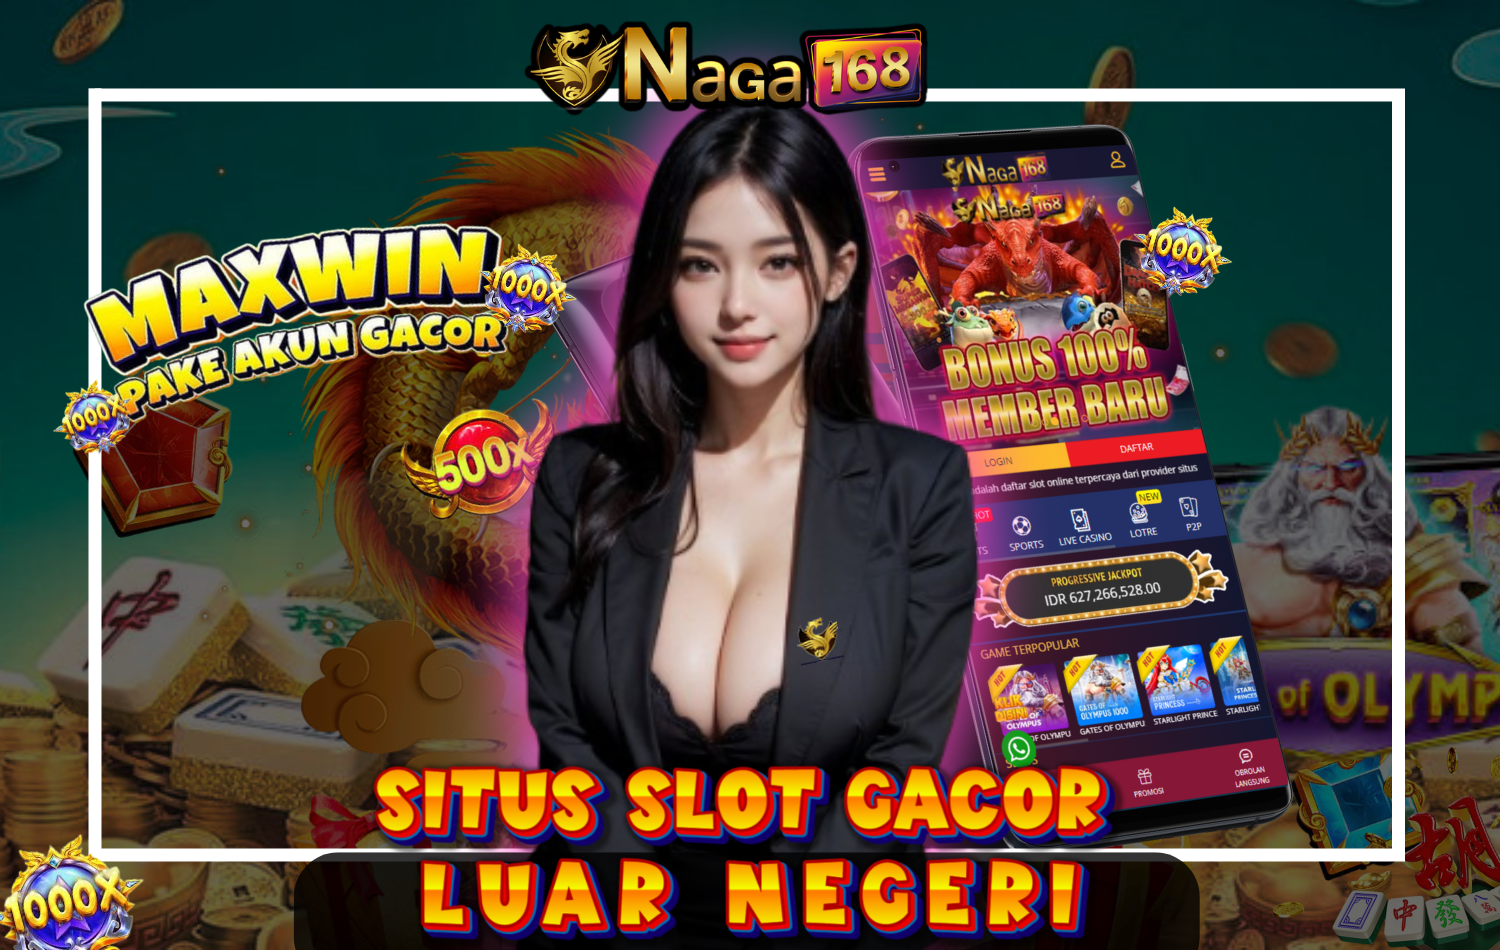 Naga168 Situs Slot Gacor Server Luar Negeri